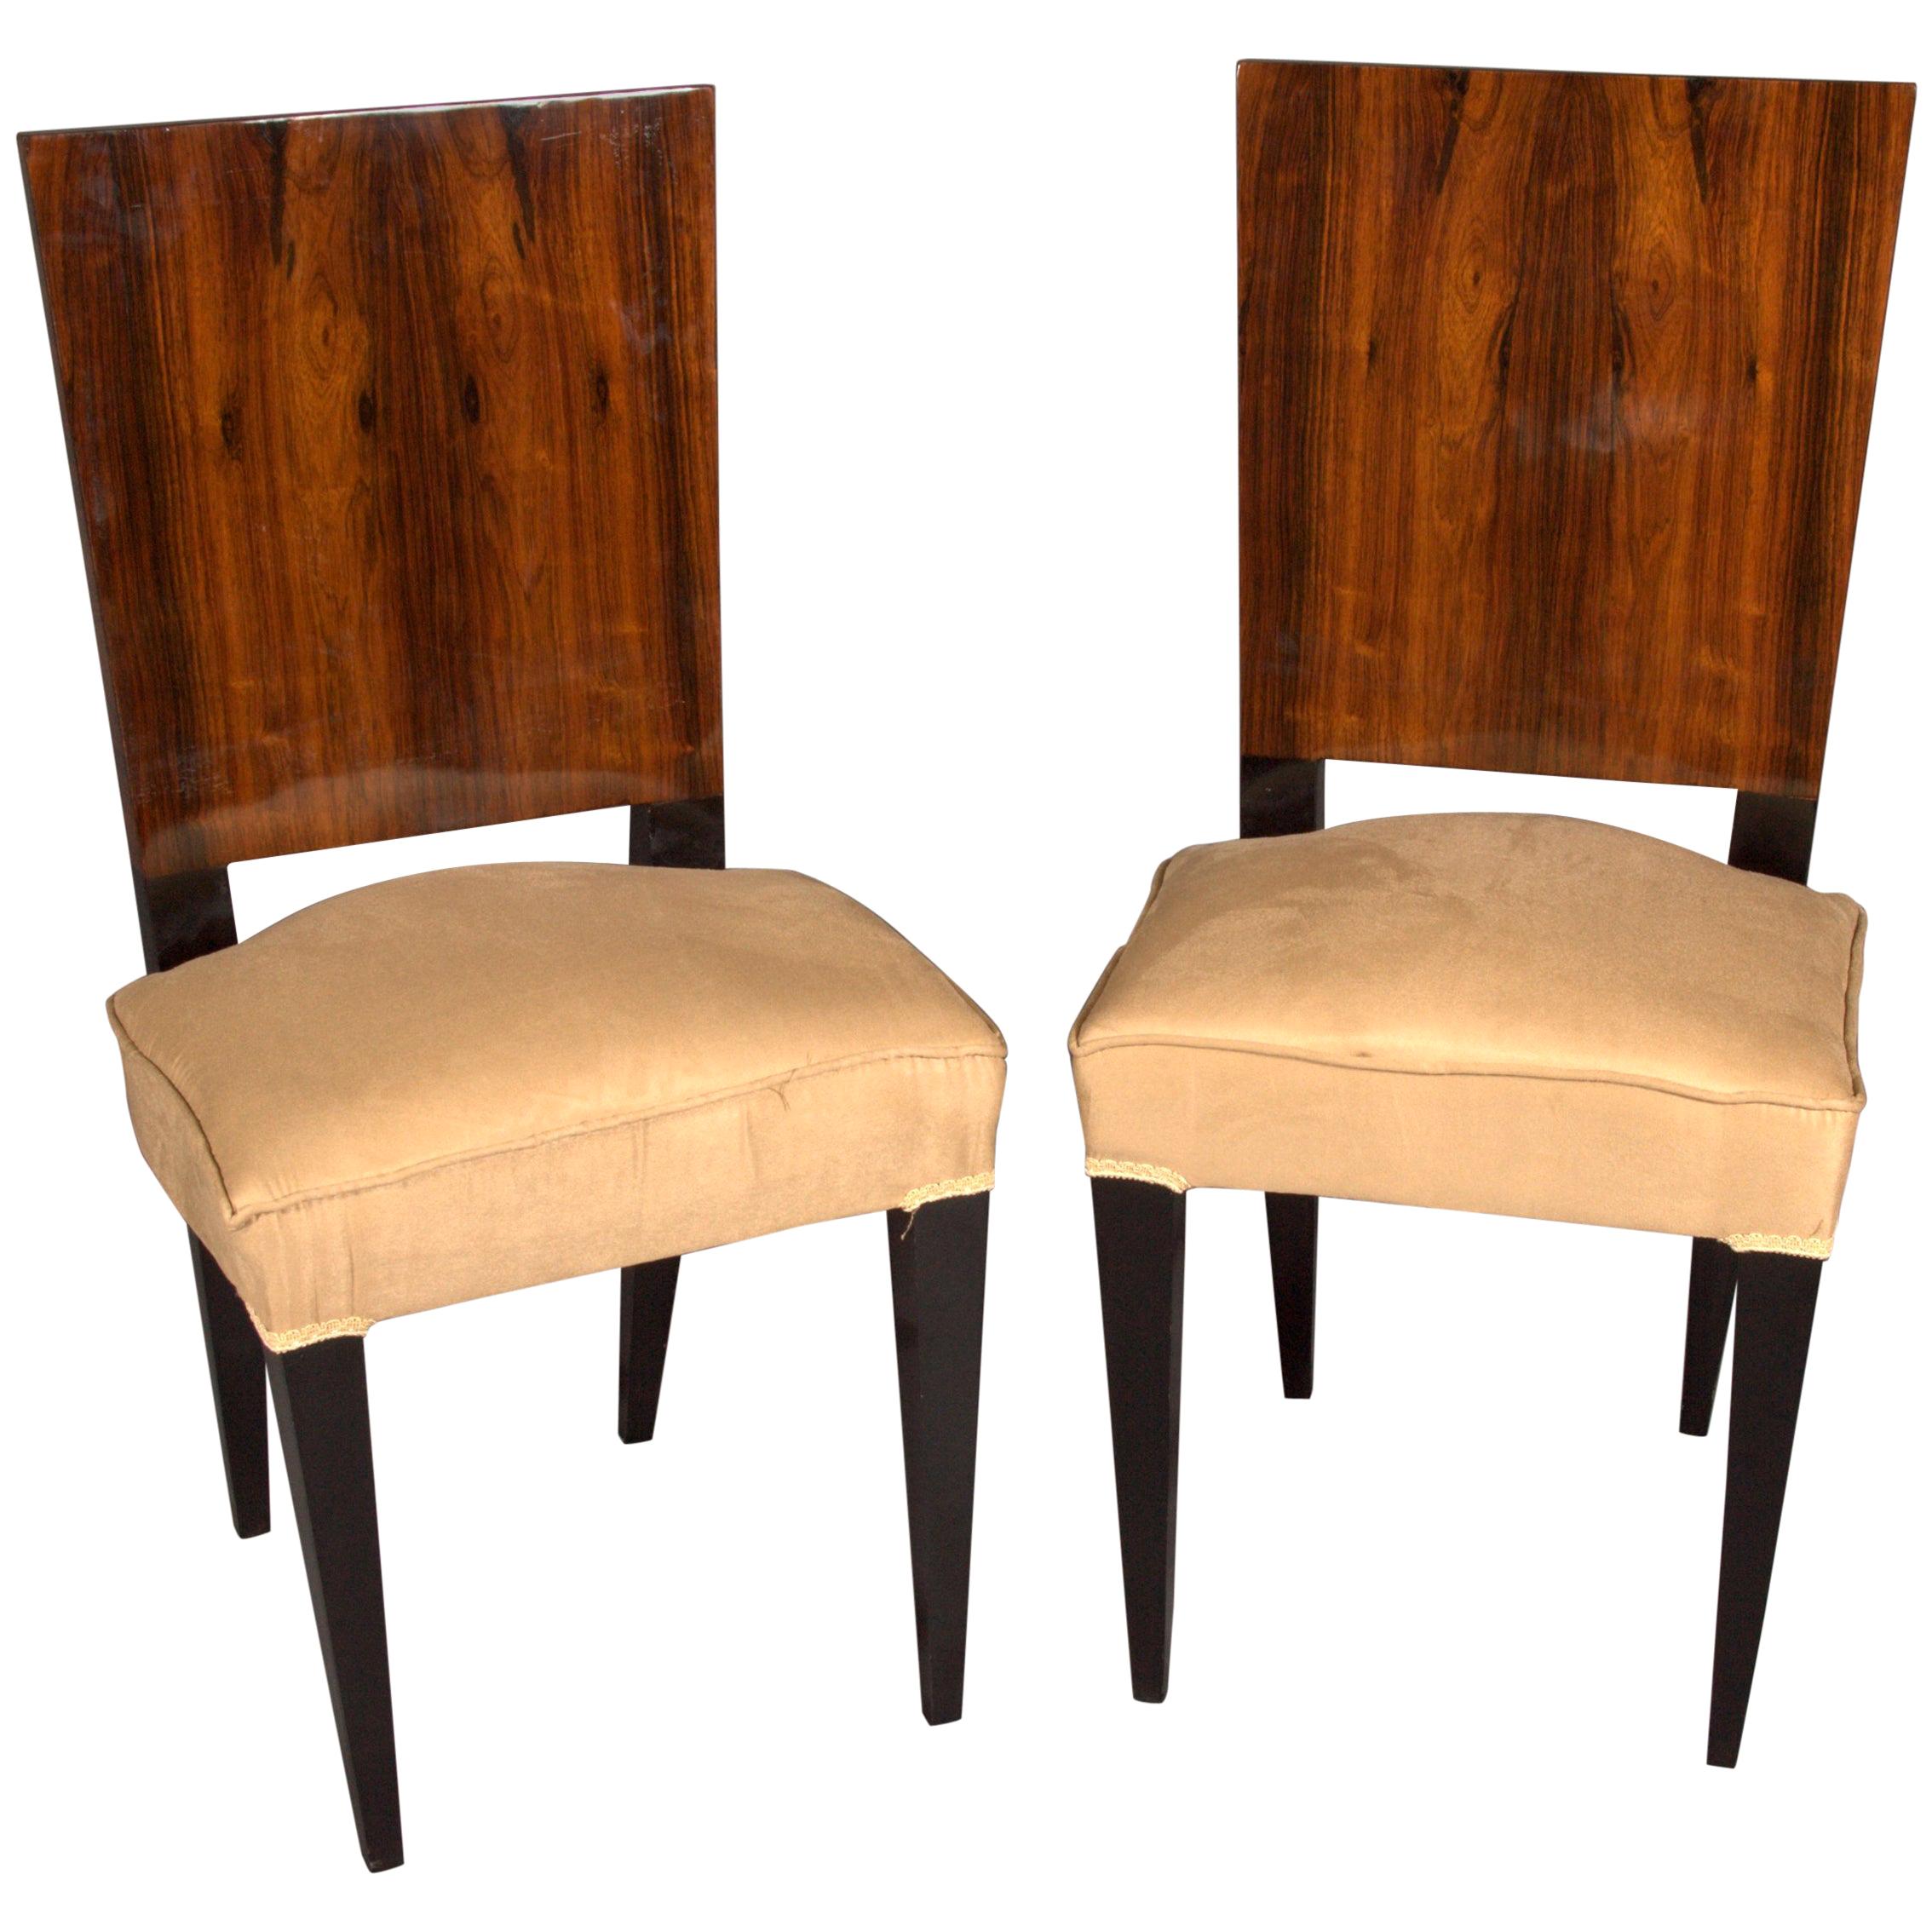 two Elegant Chair in antique Art Deco Style classic Mahogany Veneer